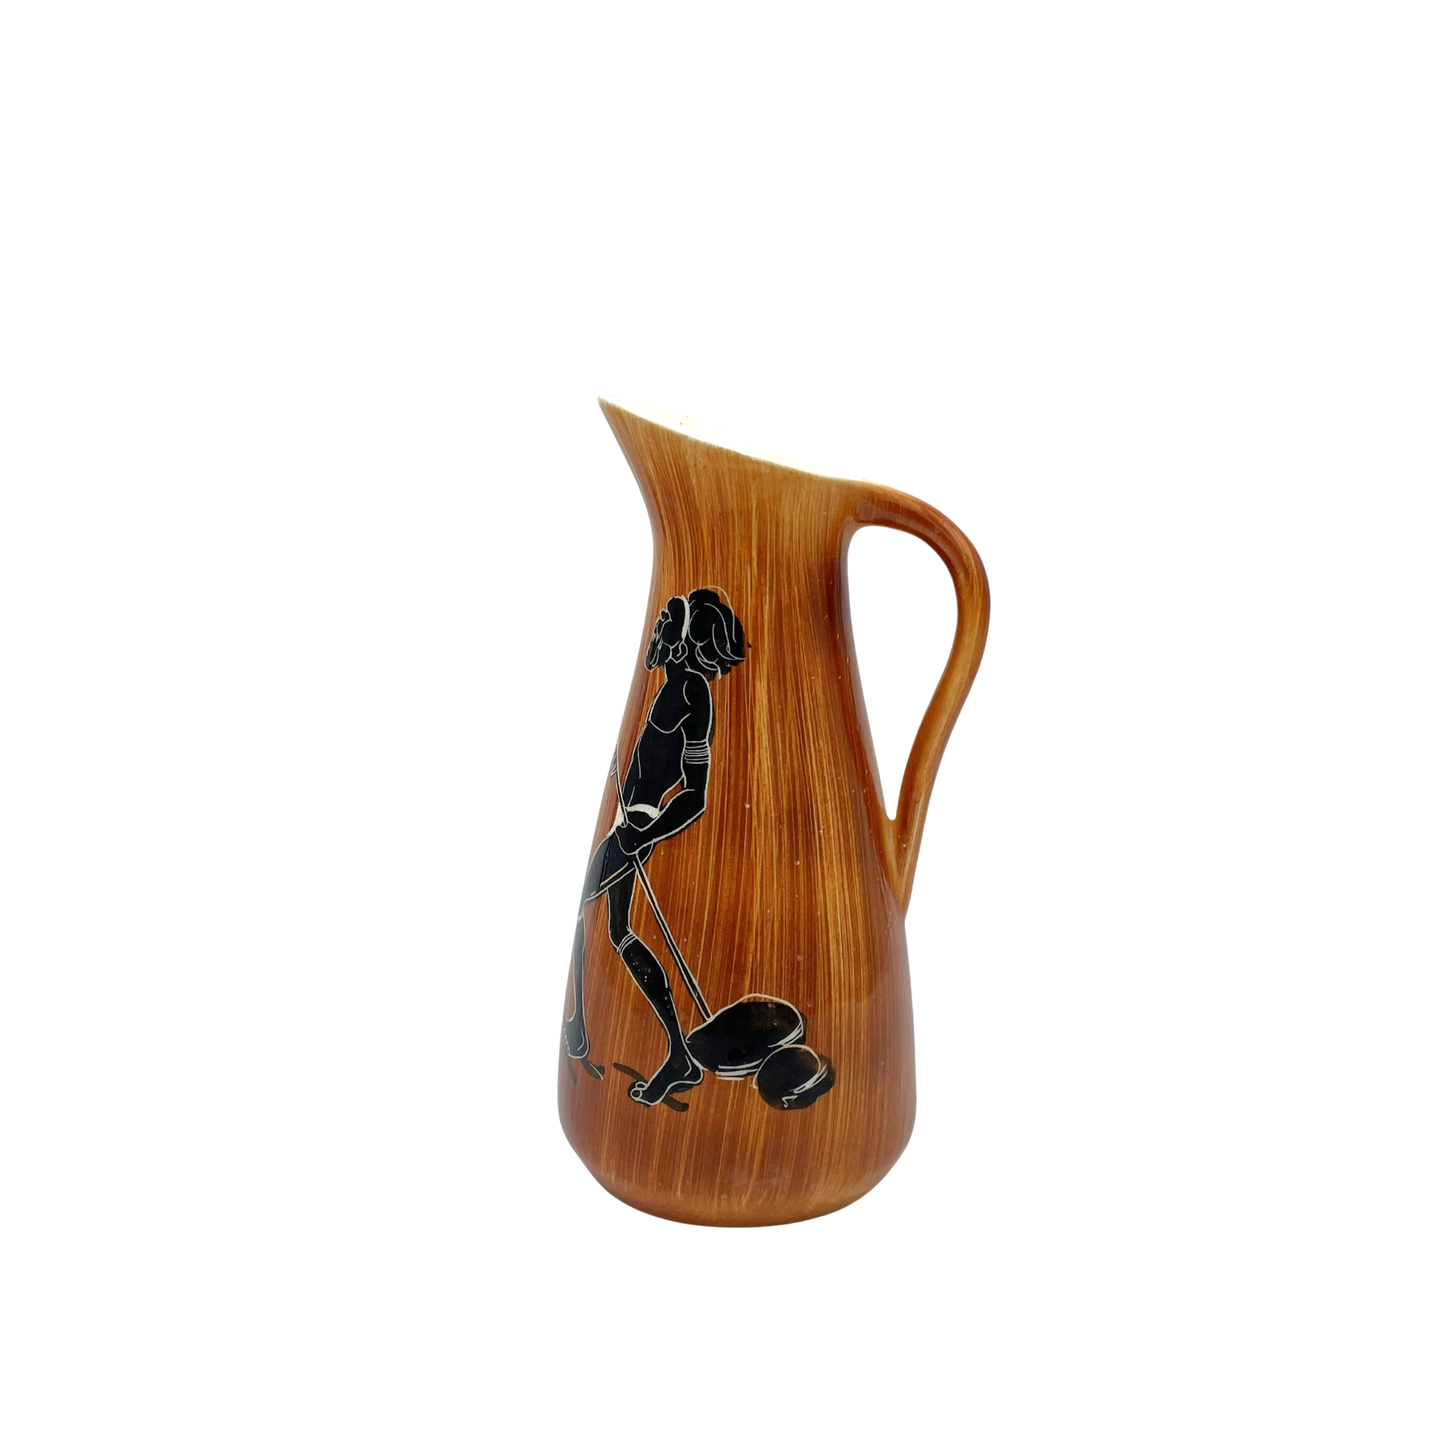 Florenz Pottery Australia Indigenous Jug - 20cm